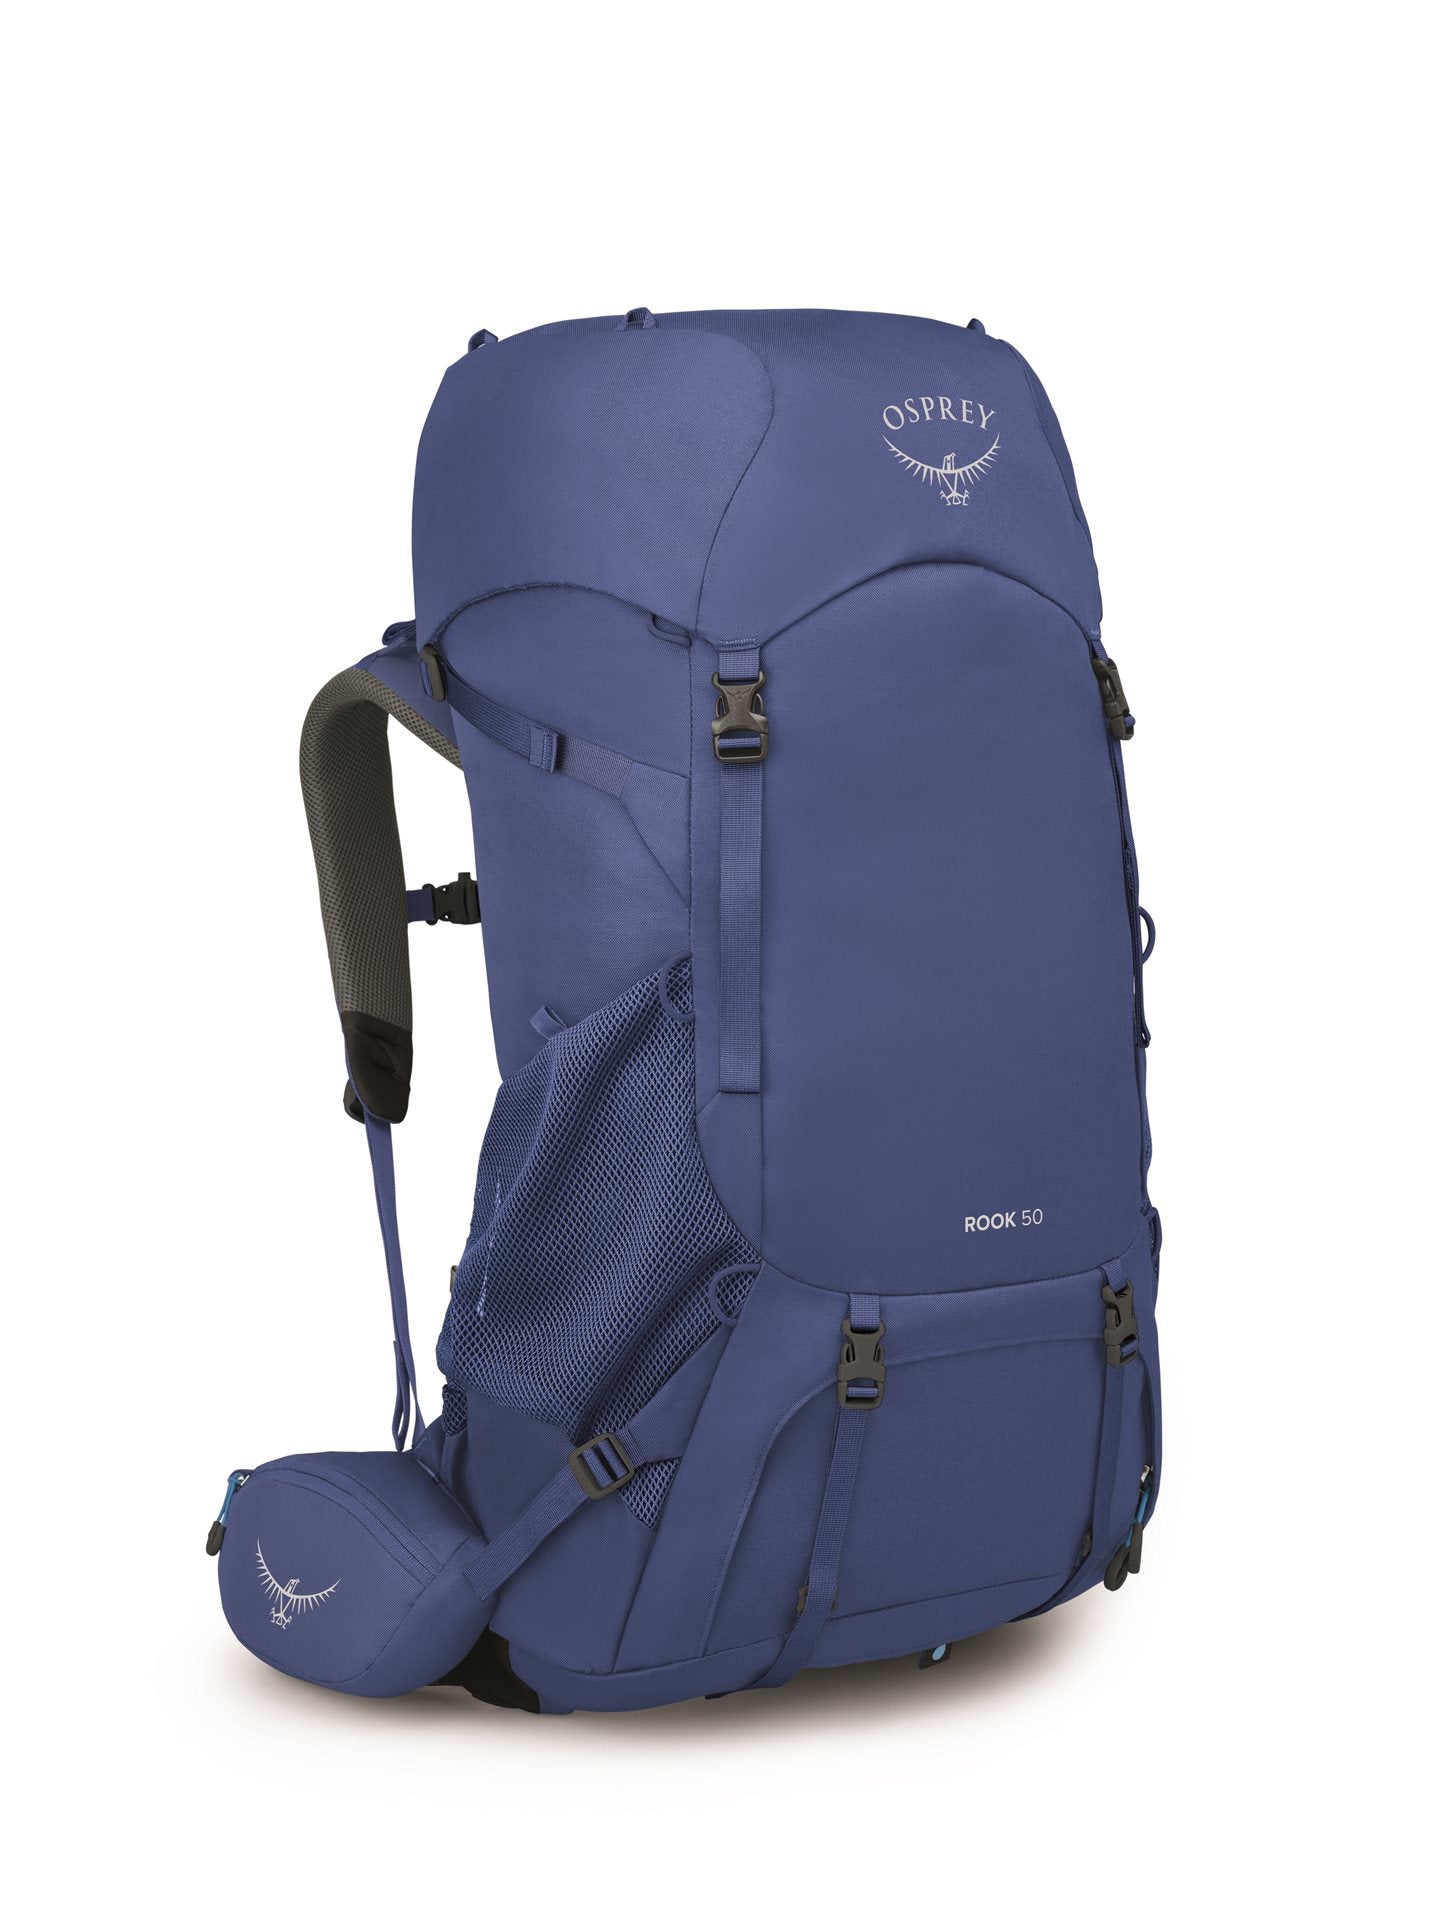 Osprey Rook 50 - Astology Blue/Blue Flame Backpack - Reisartikelen-nl